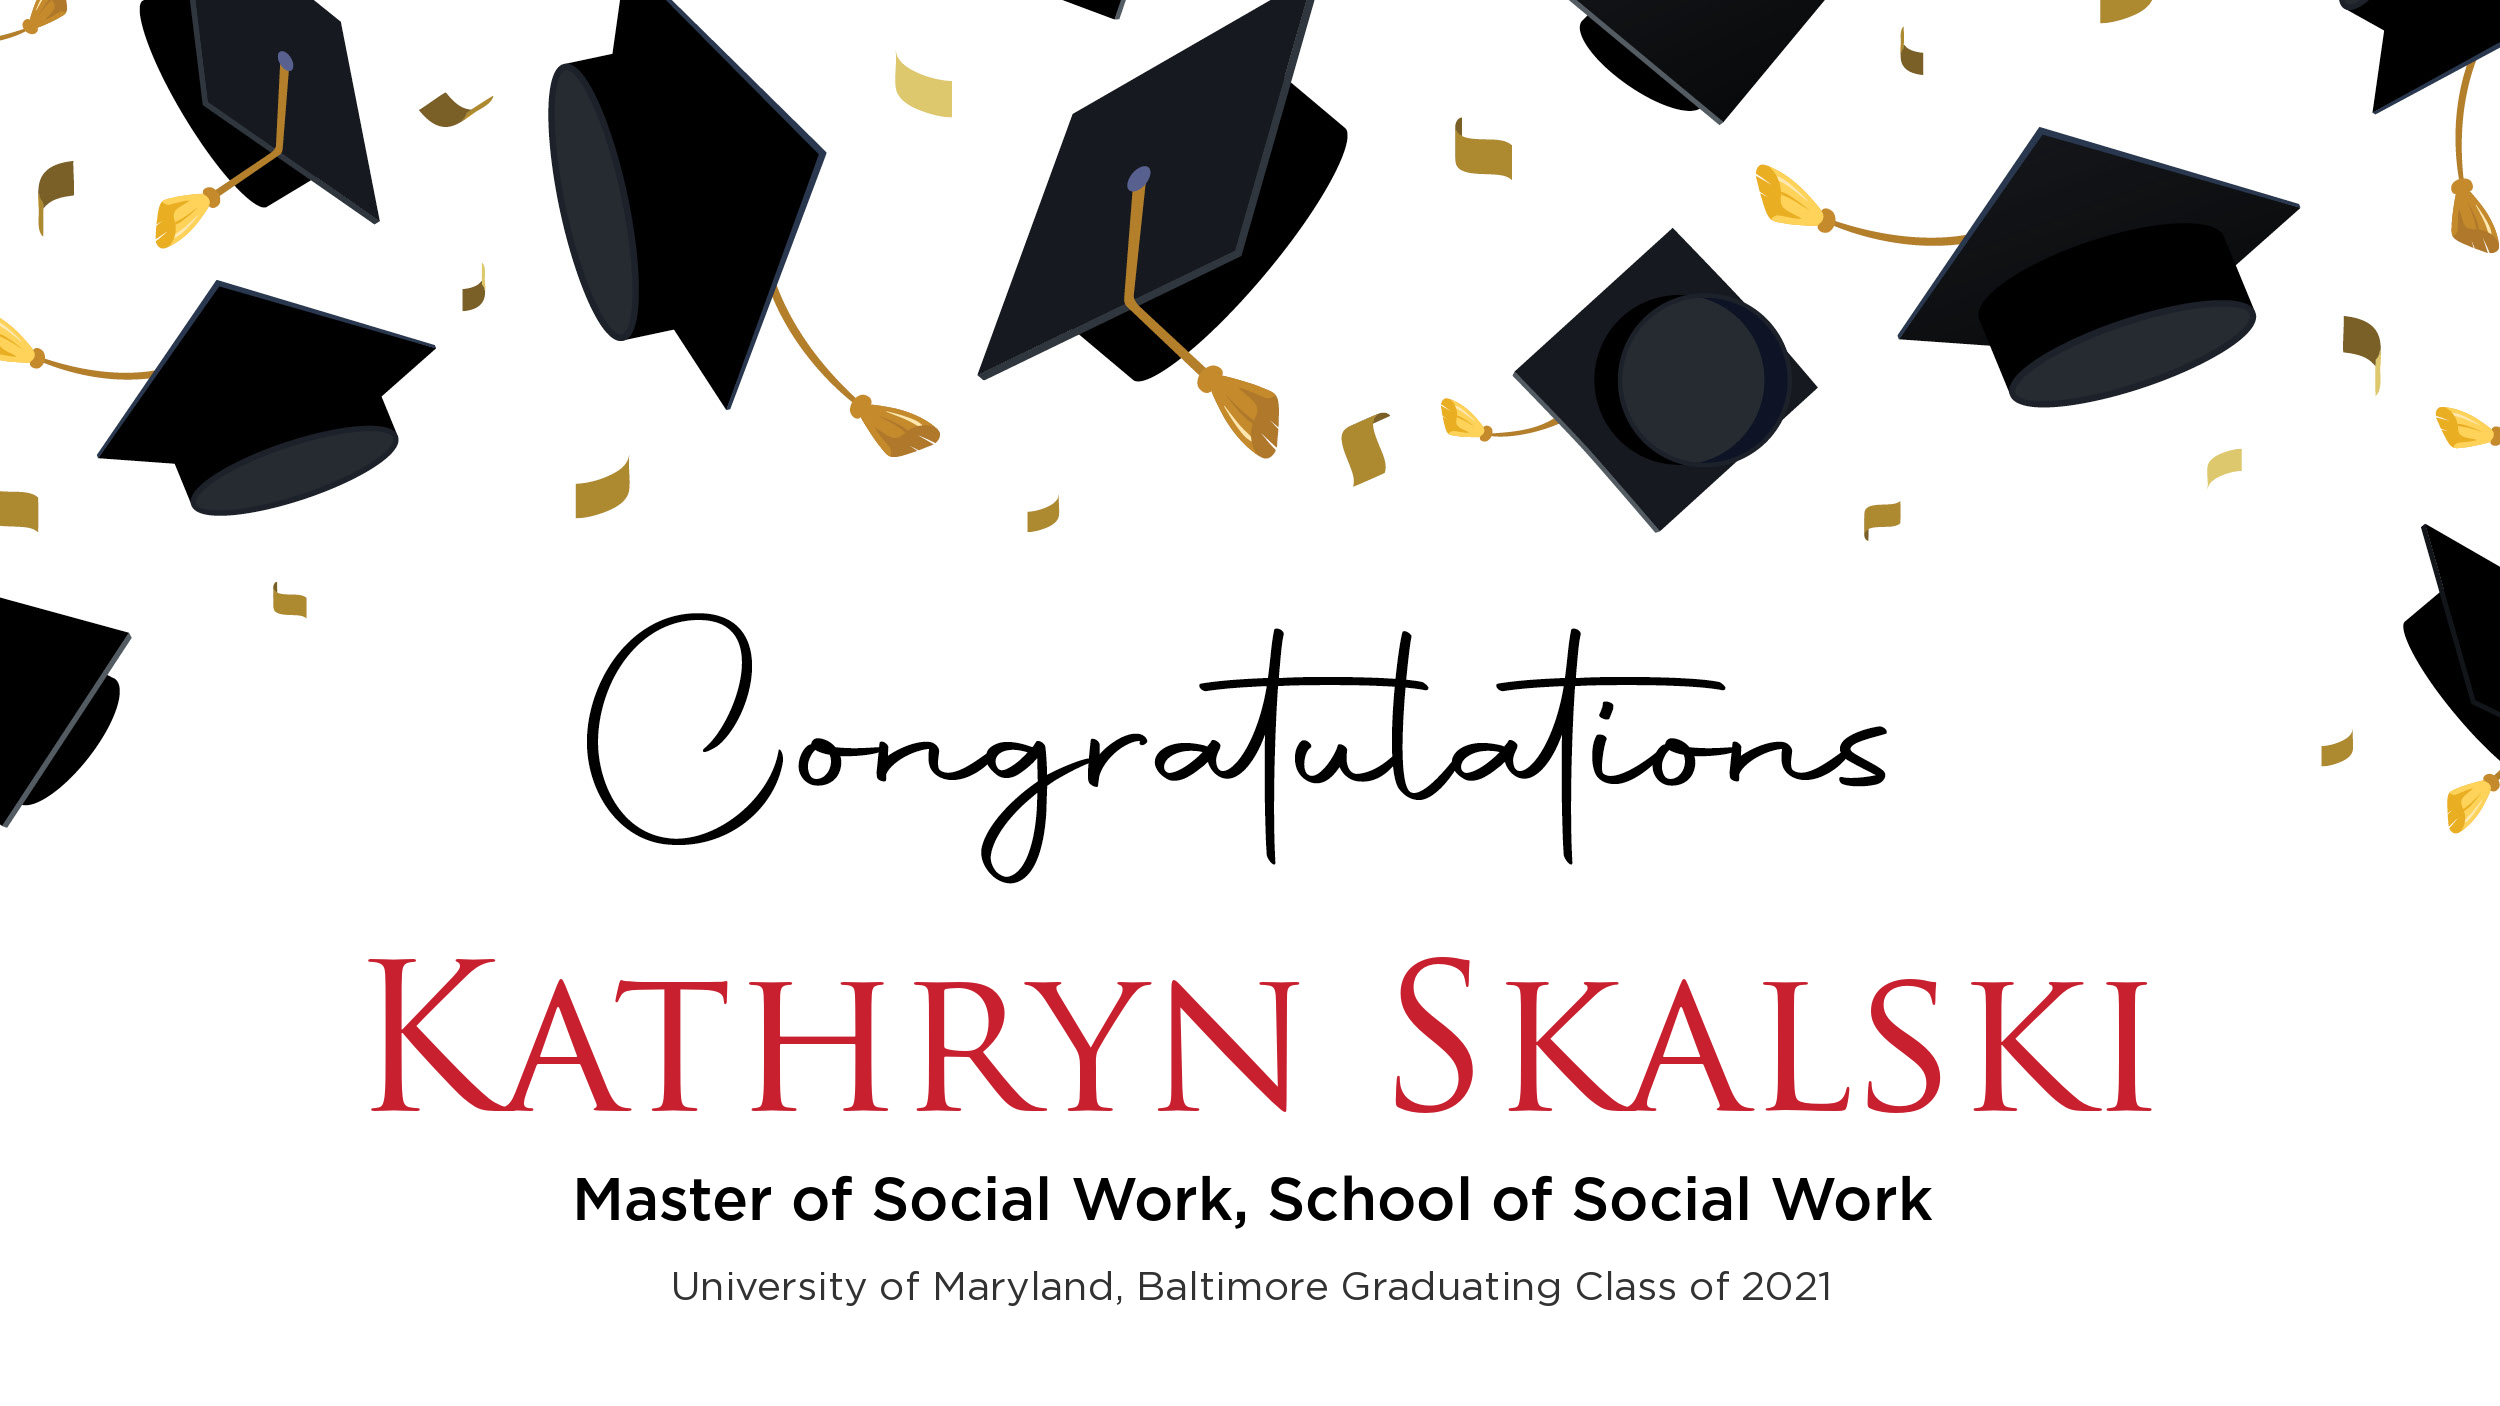 Congratulations Kathryn Skalski, Master of Social Work